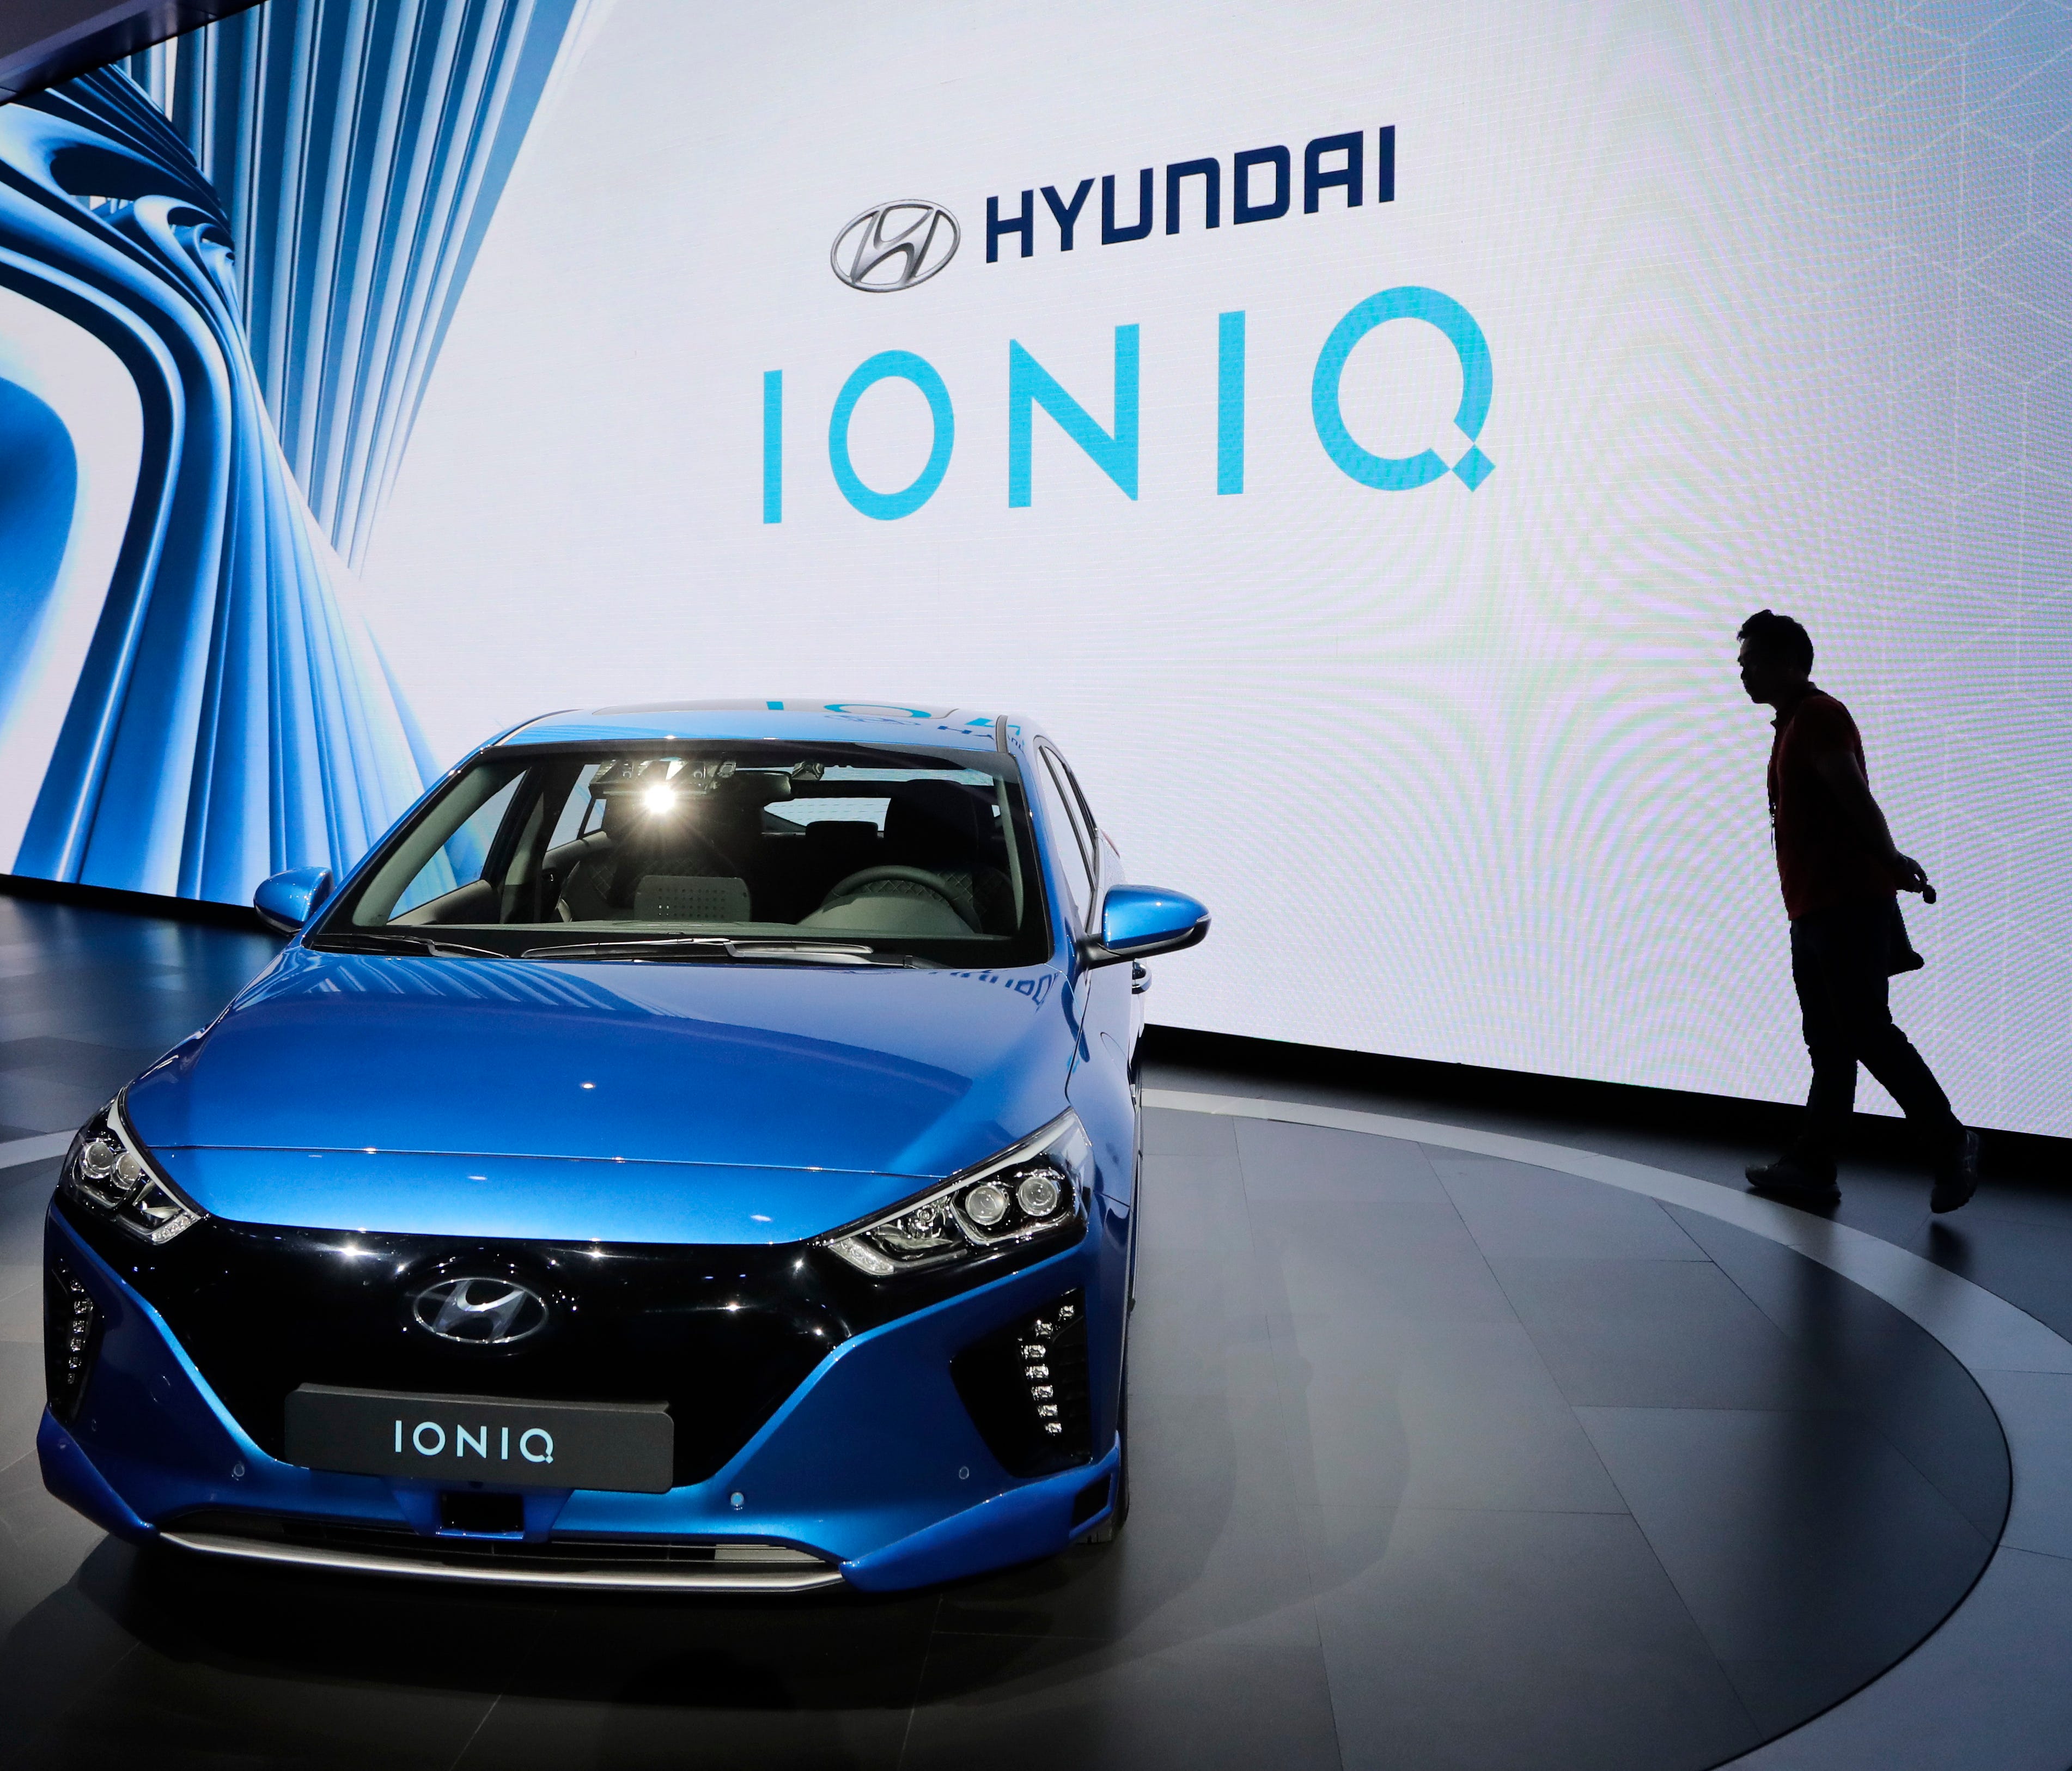 The 2017 Hyundai Ioniq Electric on display